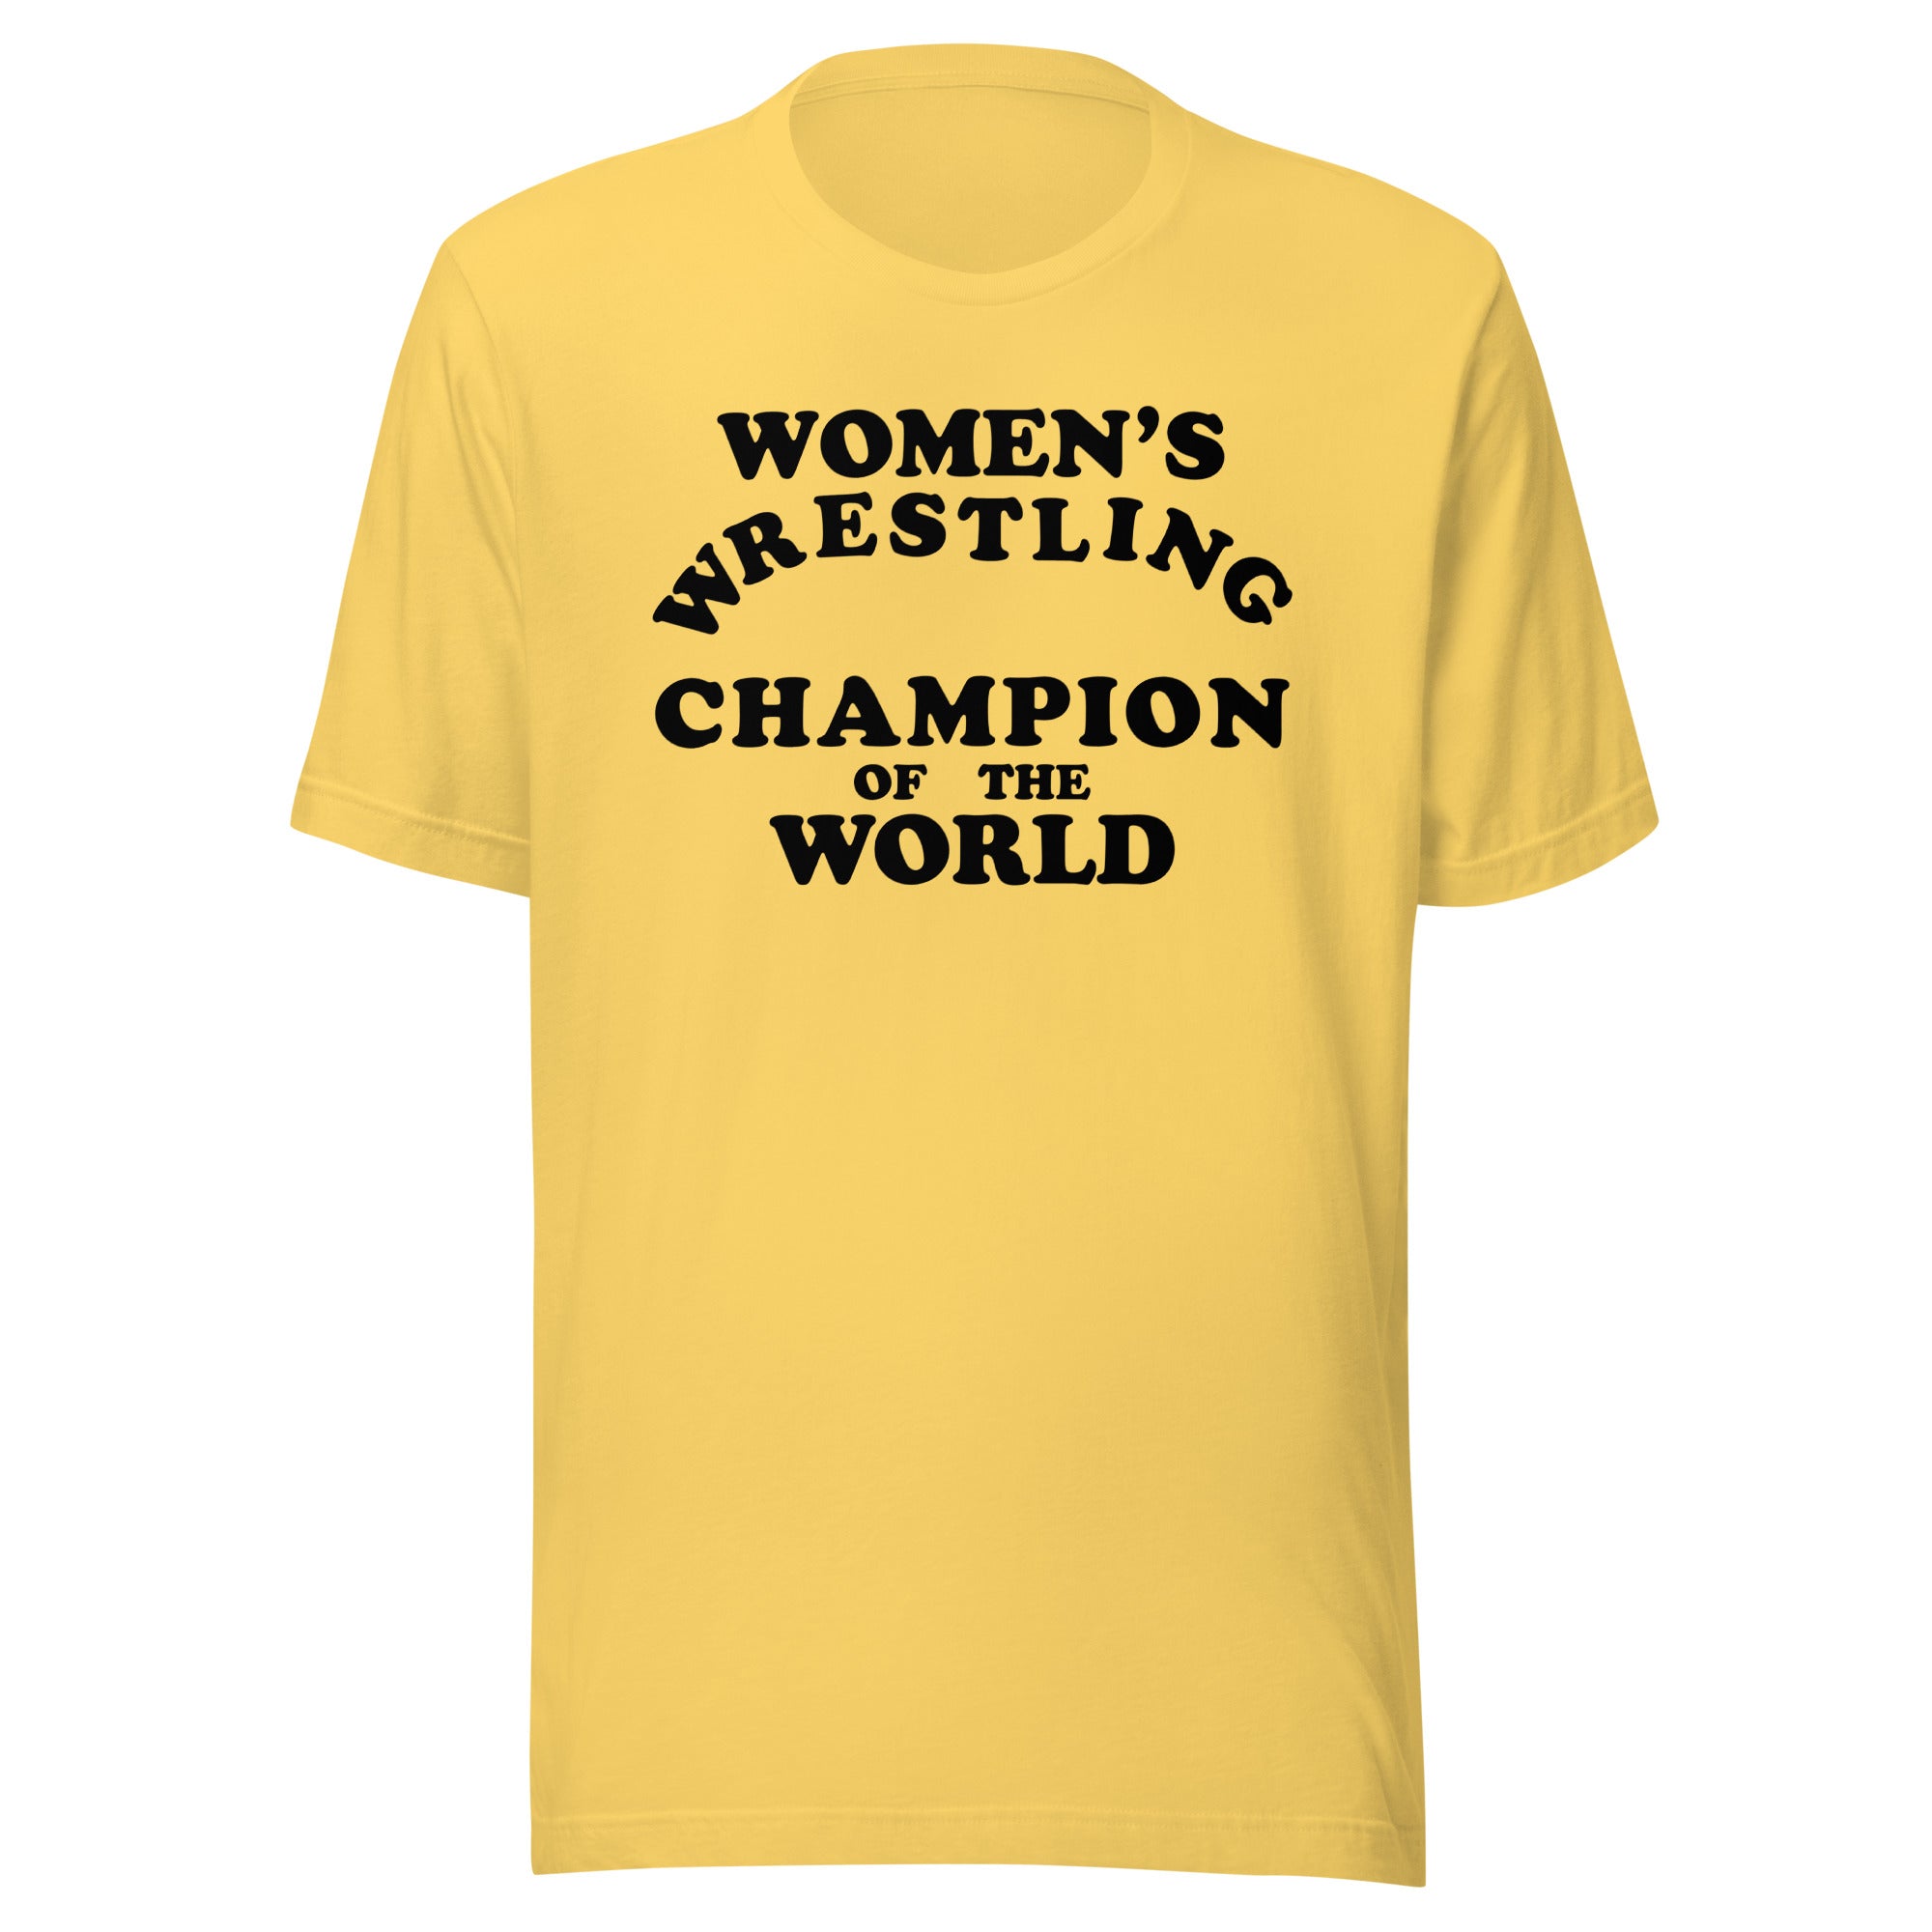 Women's Wrestling Champion of the World Kauffman T-Shirt